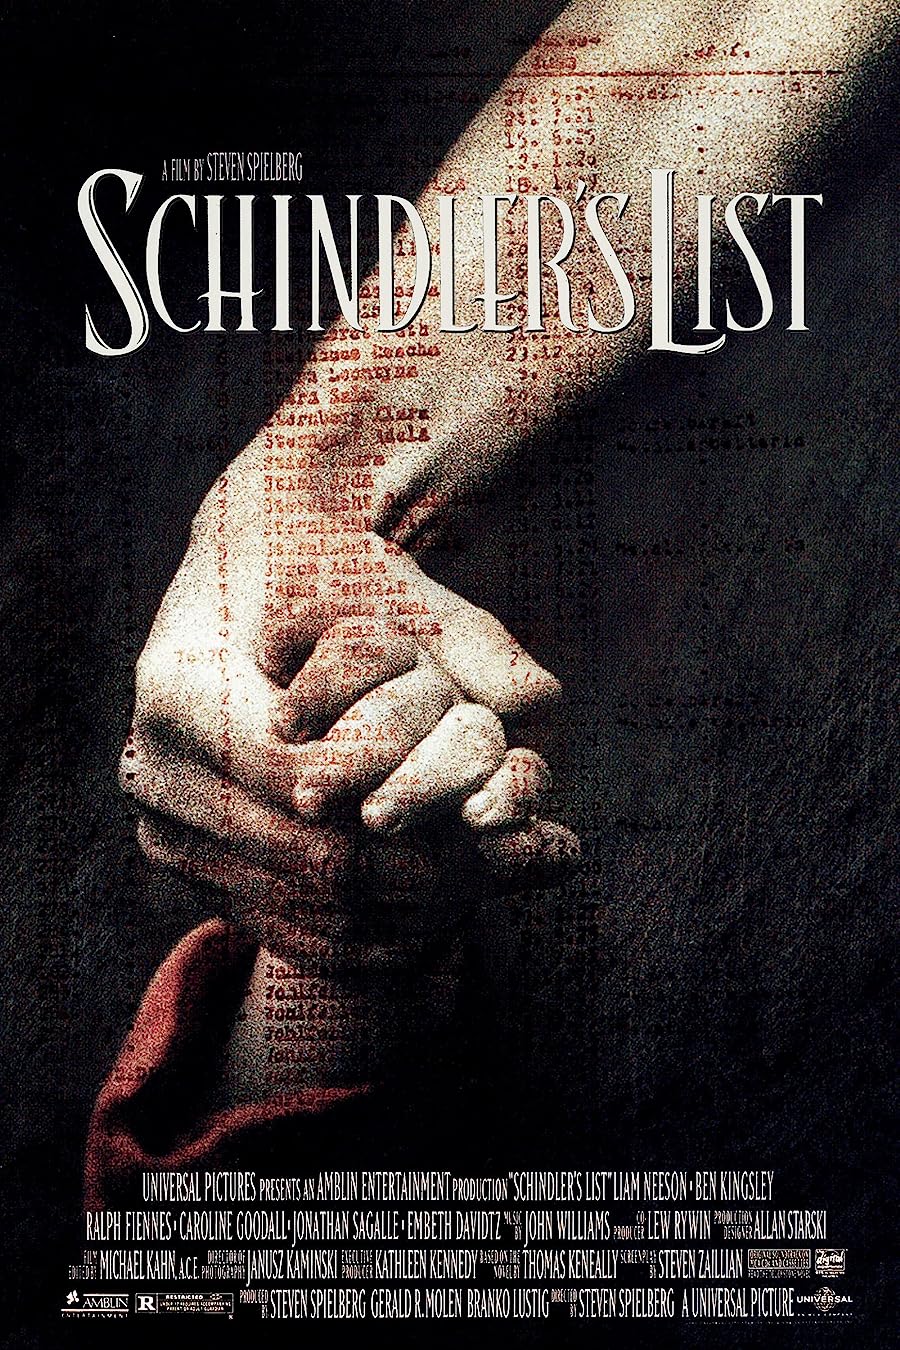 دانلود فیلم Schindler’s List 1993